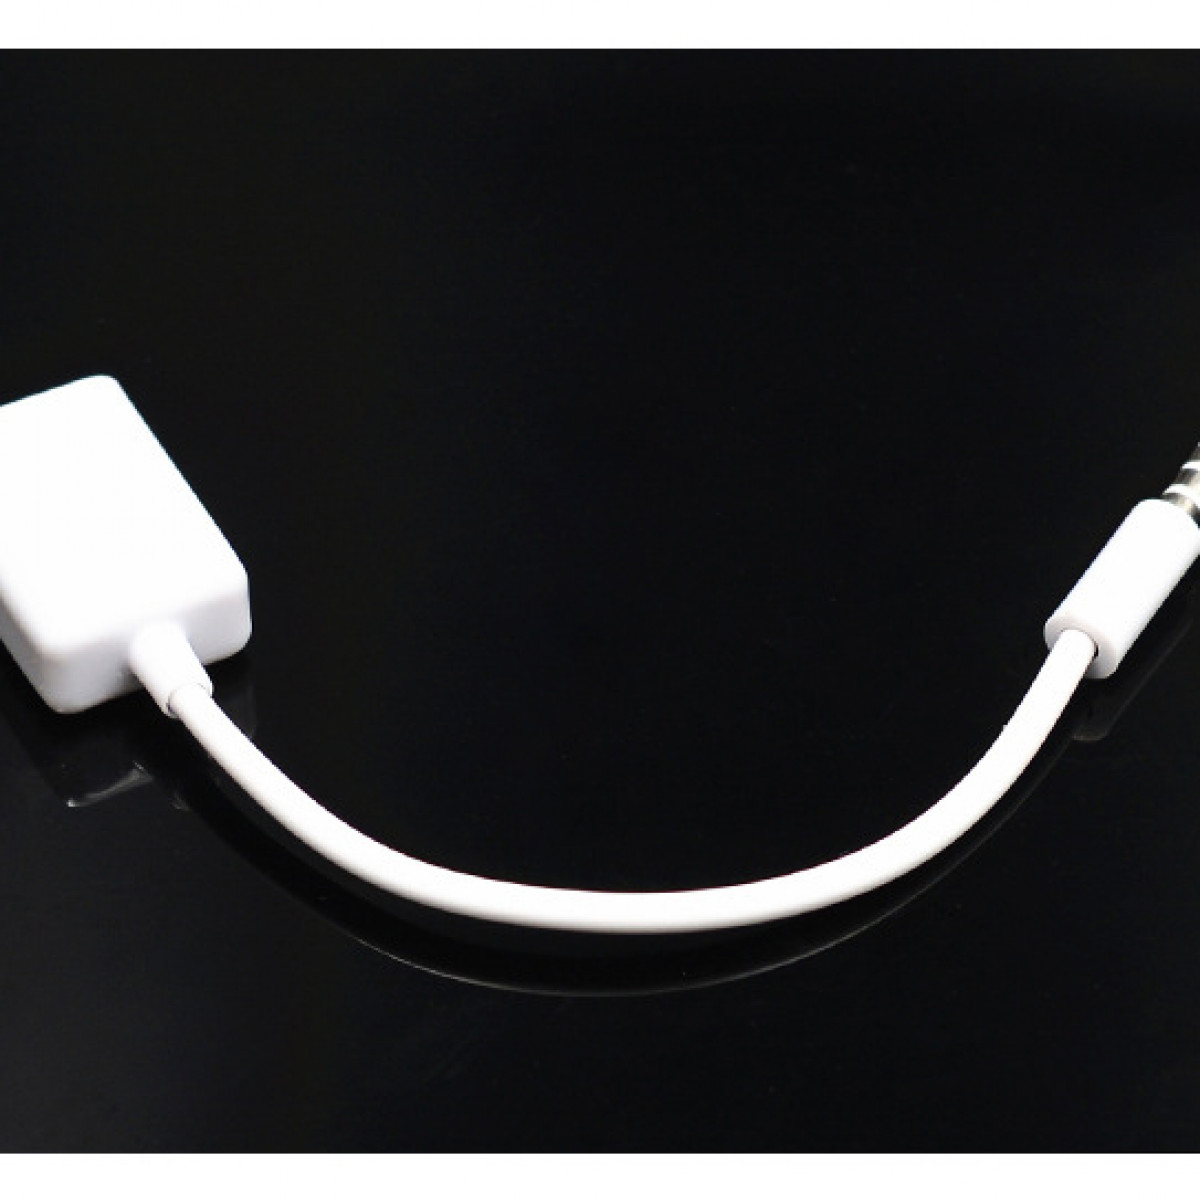 INF USB-Adapter mm / 3.5 USB-Adapter mm Aux Klinke Audio-Adapter Audio-Adapter Klinke / Aux 3.5